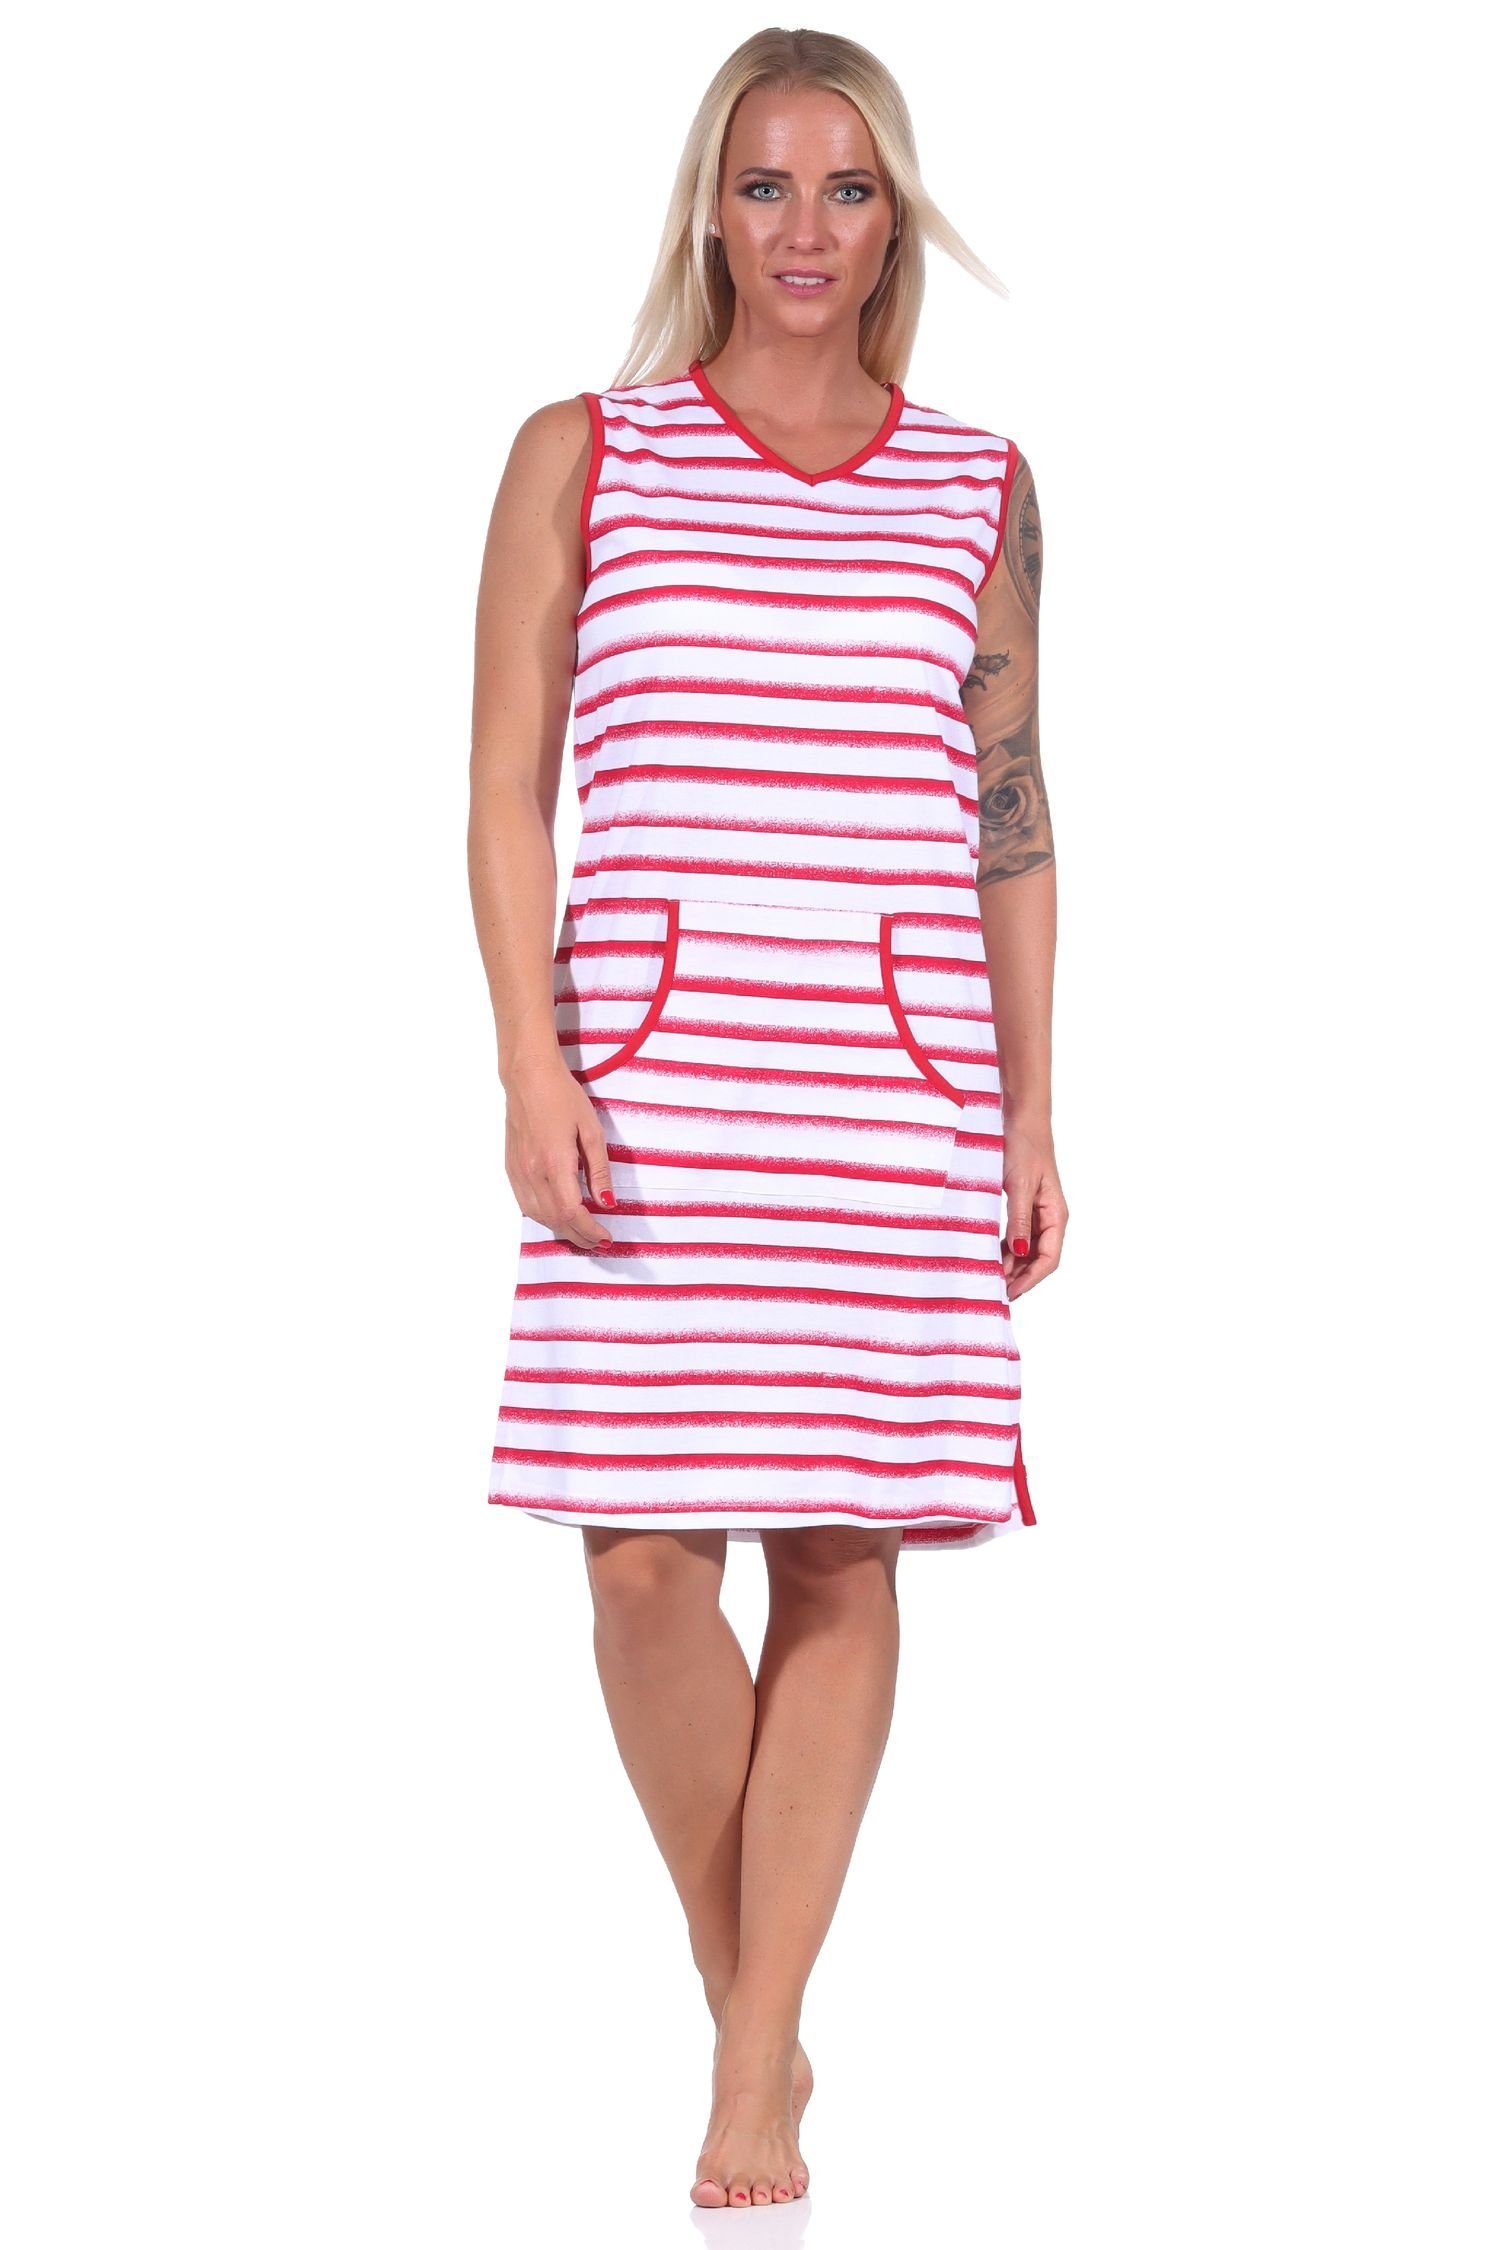 Normann Nachthemd Damen Achselträger Nachthemd Strandkleid in maritimer Streifenoptik rot